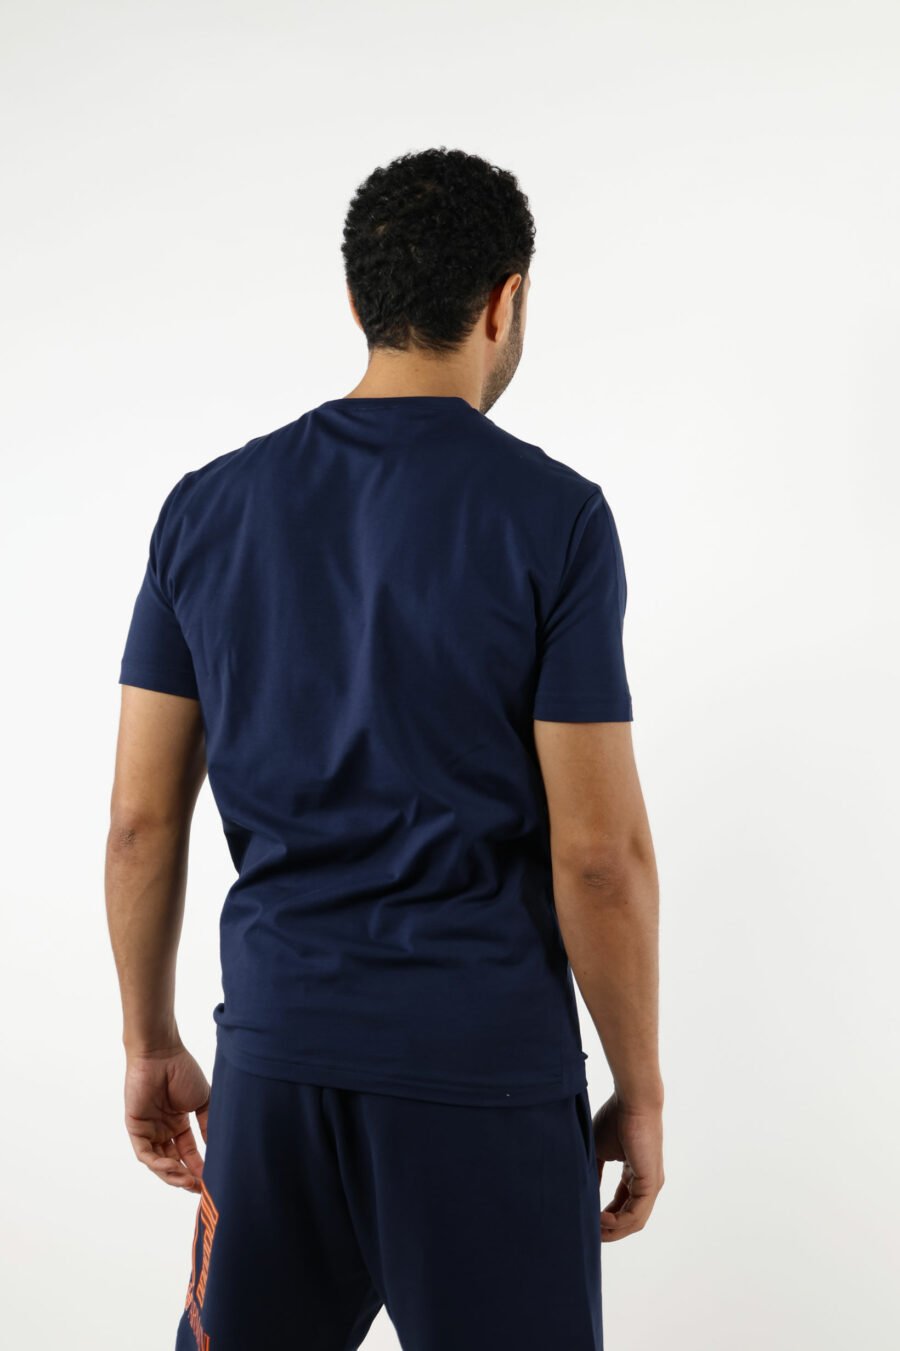 Camiseta azul oscura con maxilogo "lux identity" naranja neón - 110891